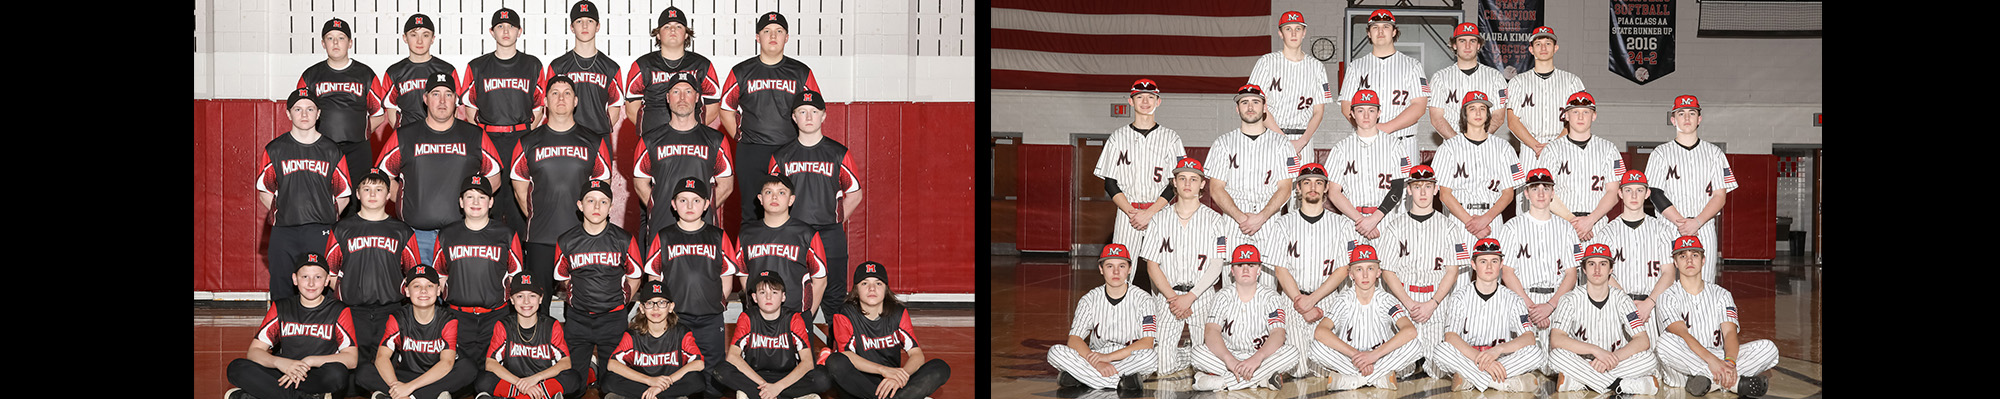 Boys HS and Jr. High baseball teams